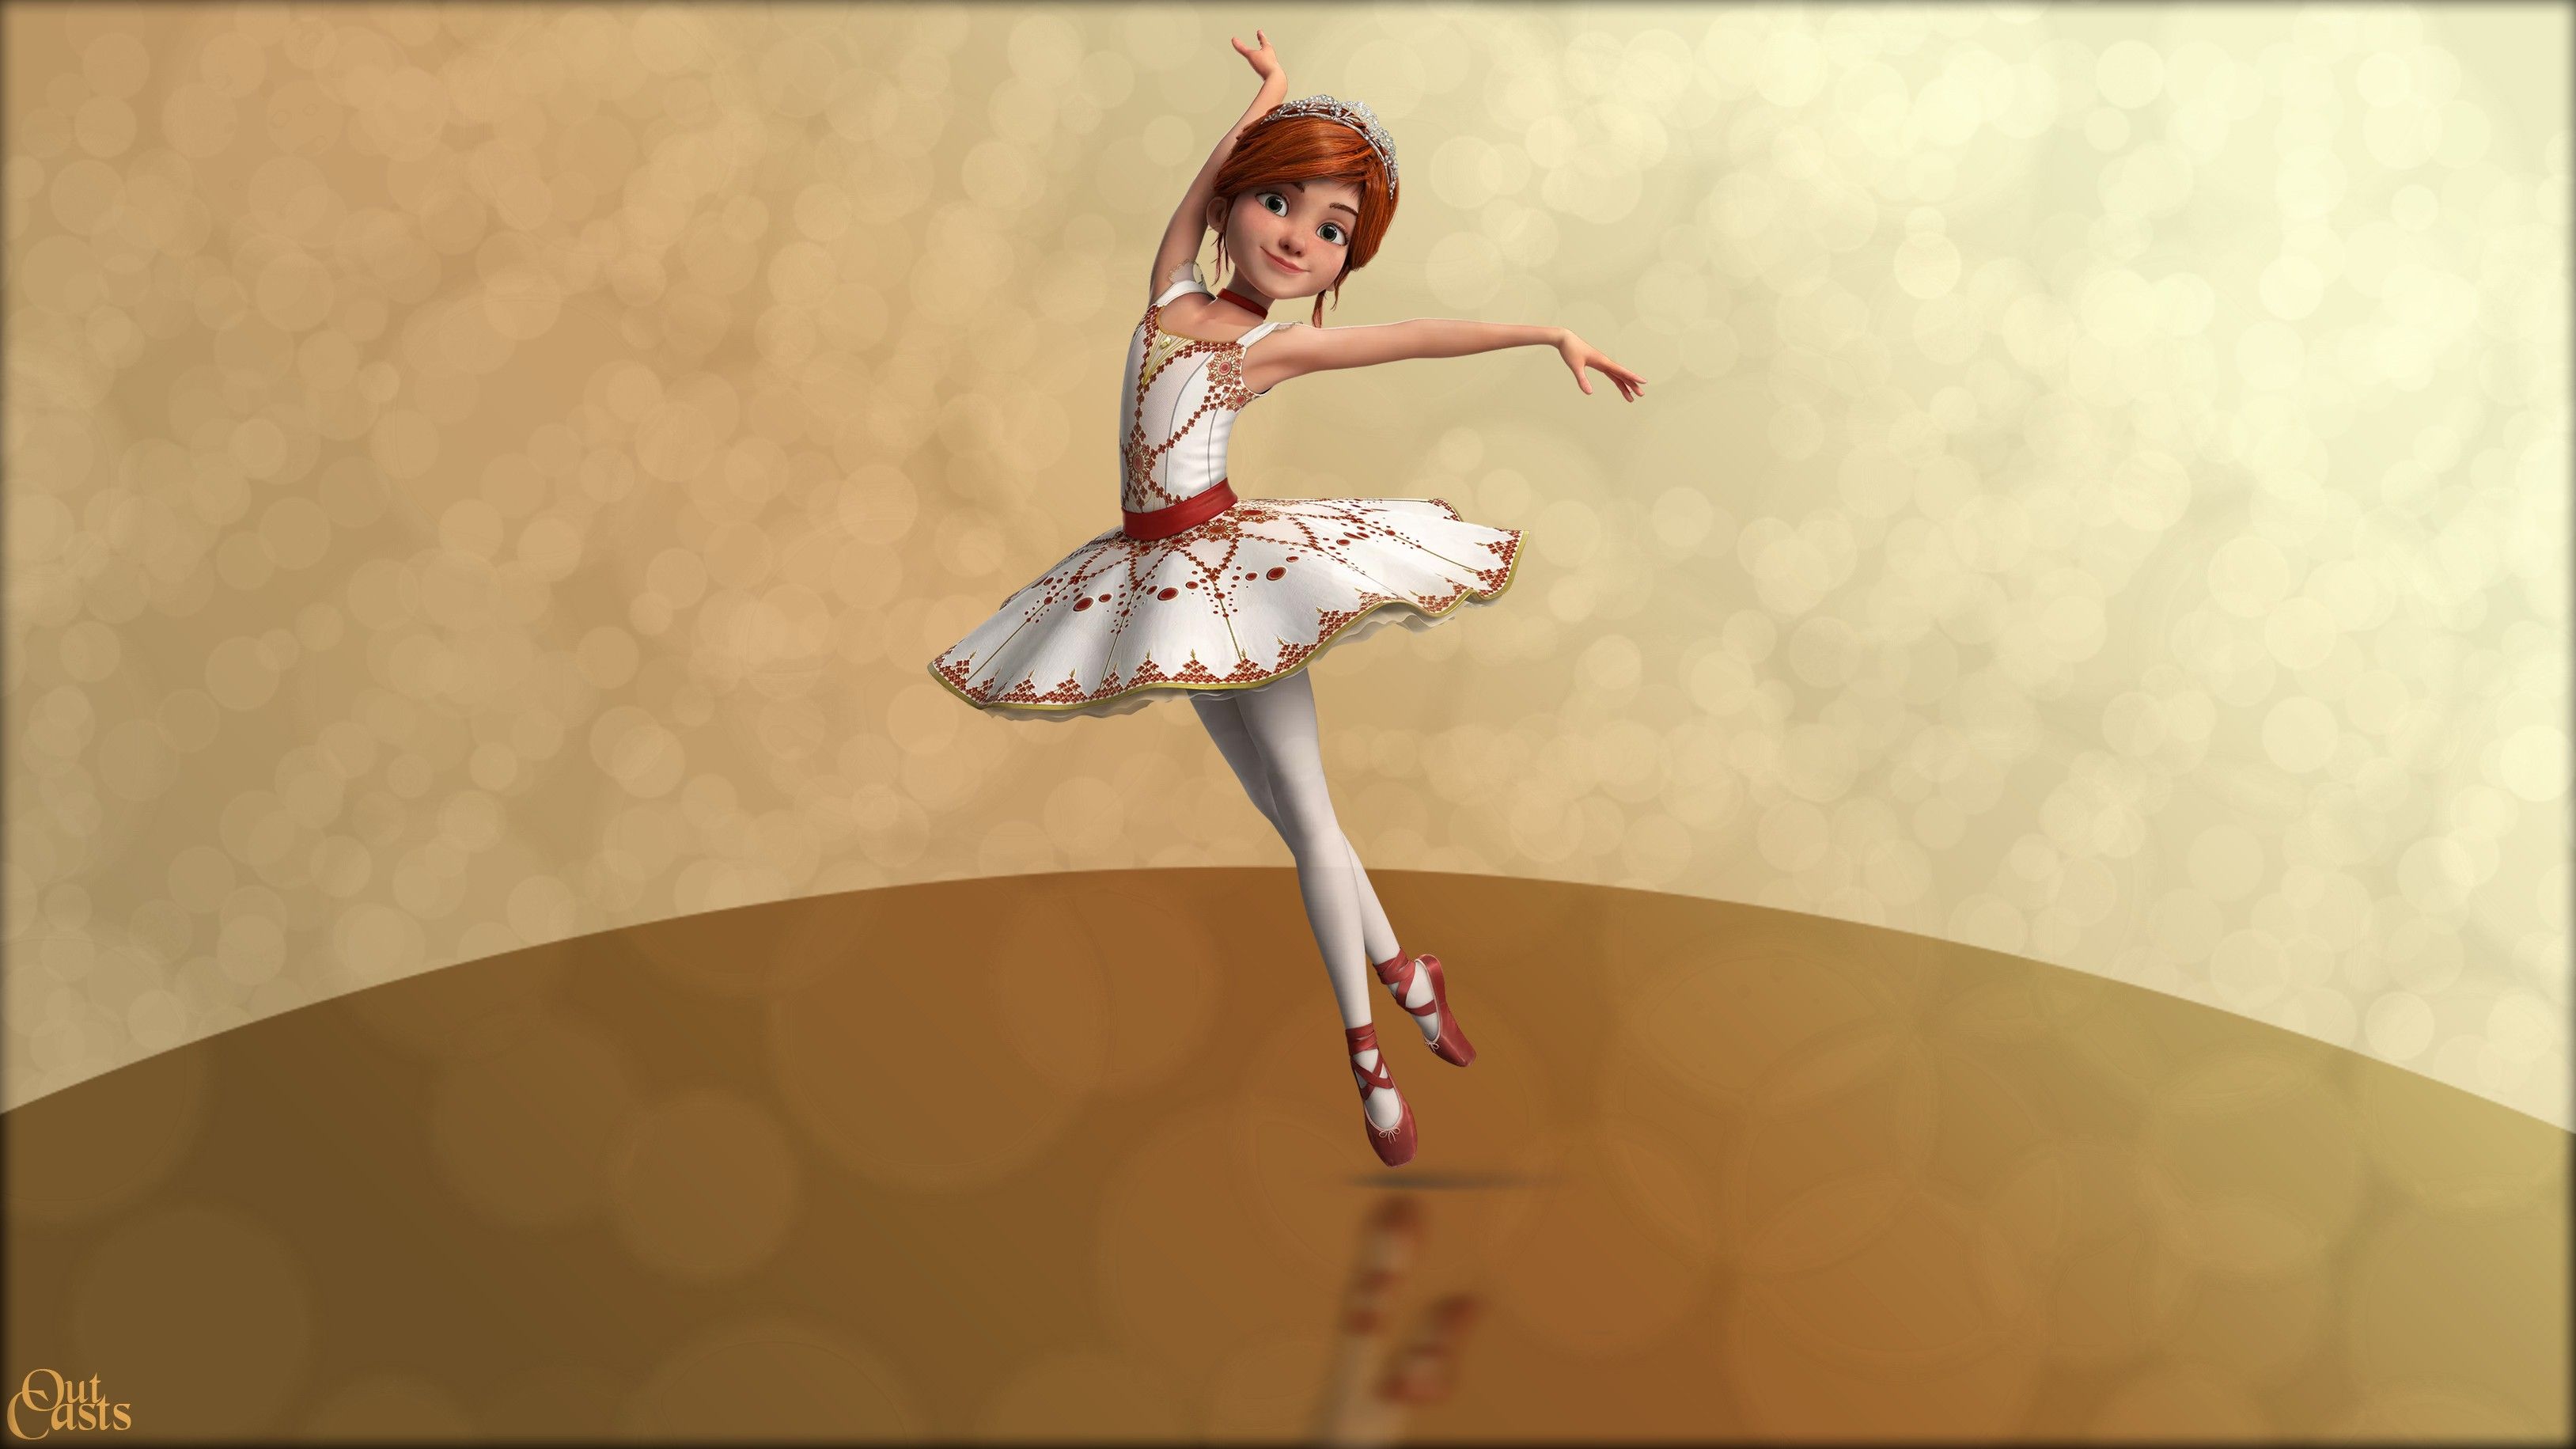 Fondos de pantalla: bailarina, salto, F licie Milliner 3256x1831